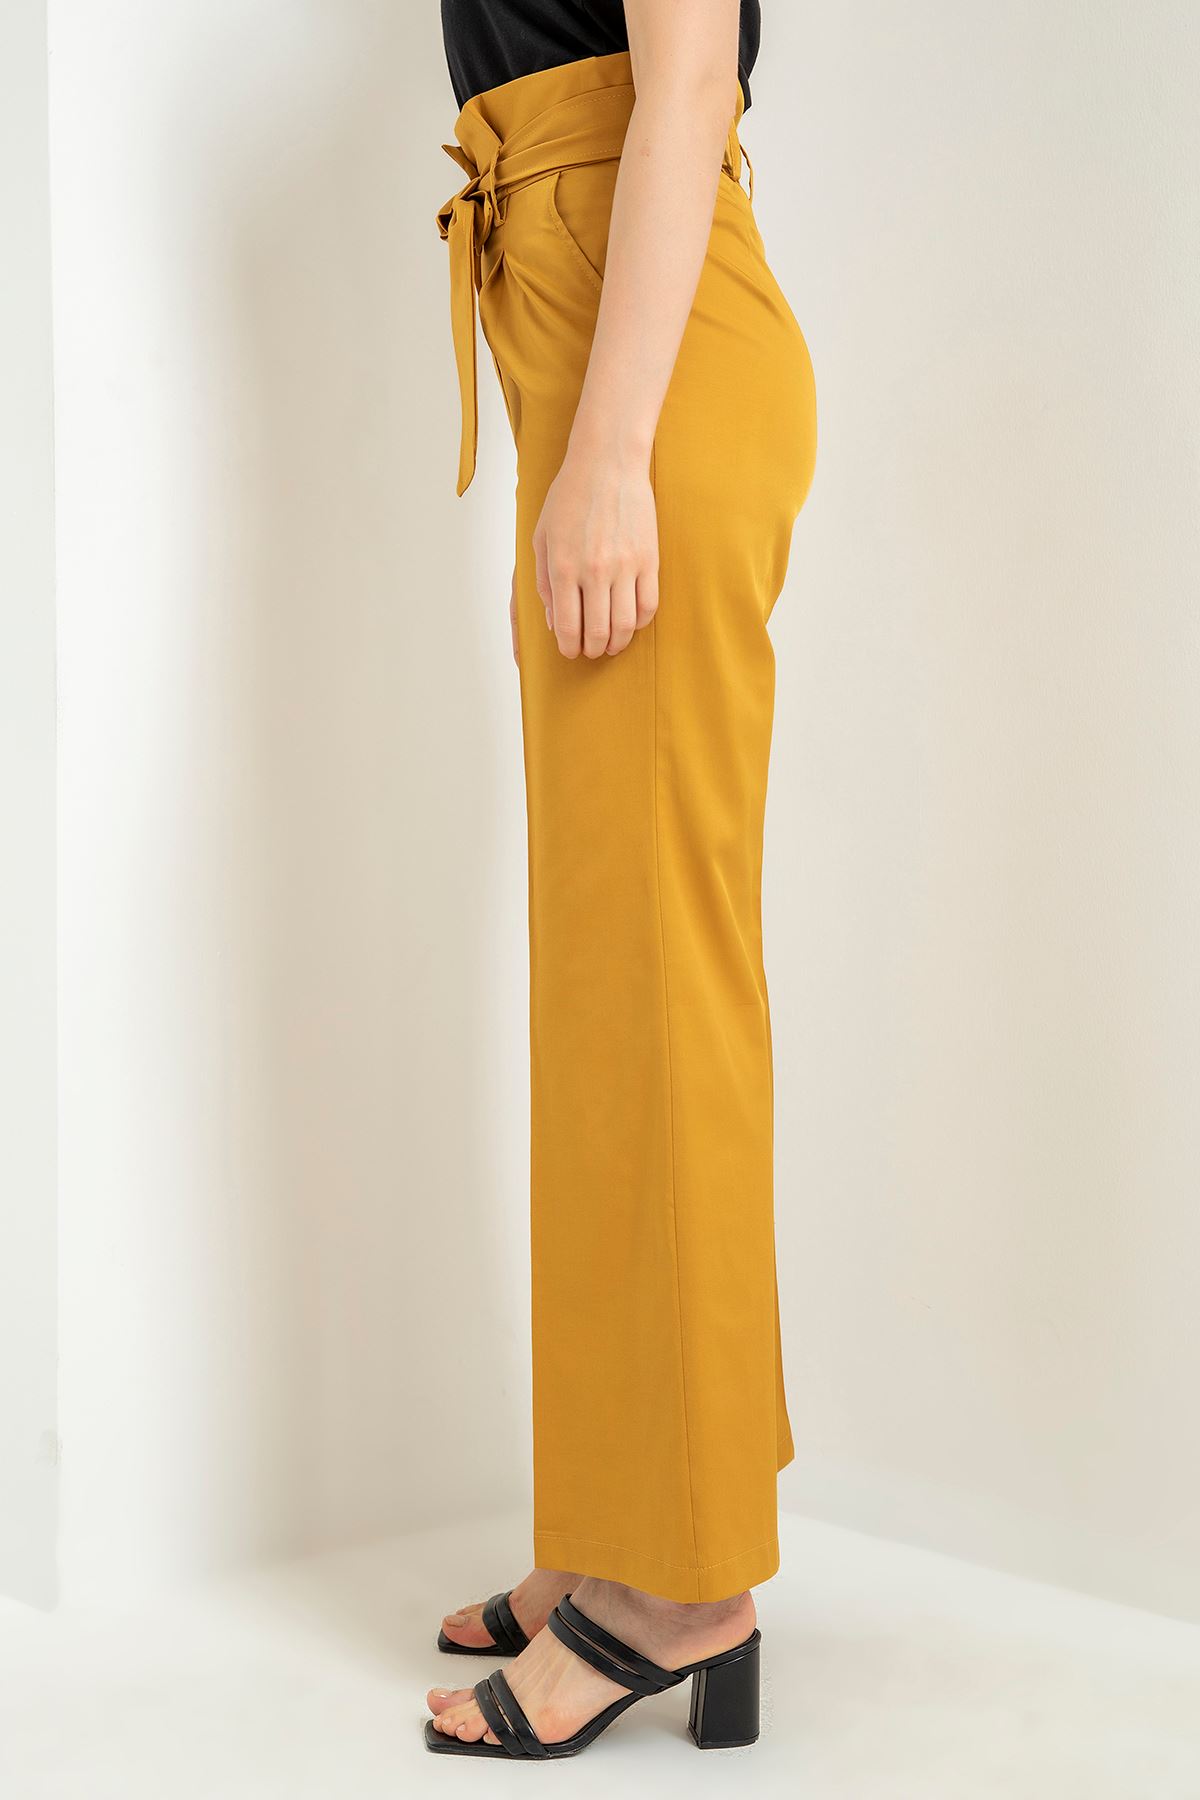 Aerobin Fabric Short Sleeve Ruffled Collar Comfy Fit Women Dress - Mustard